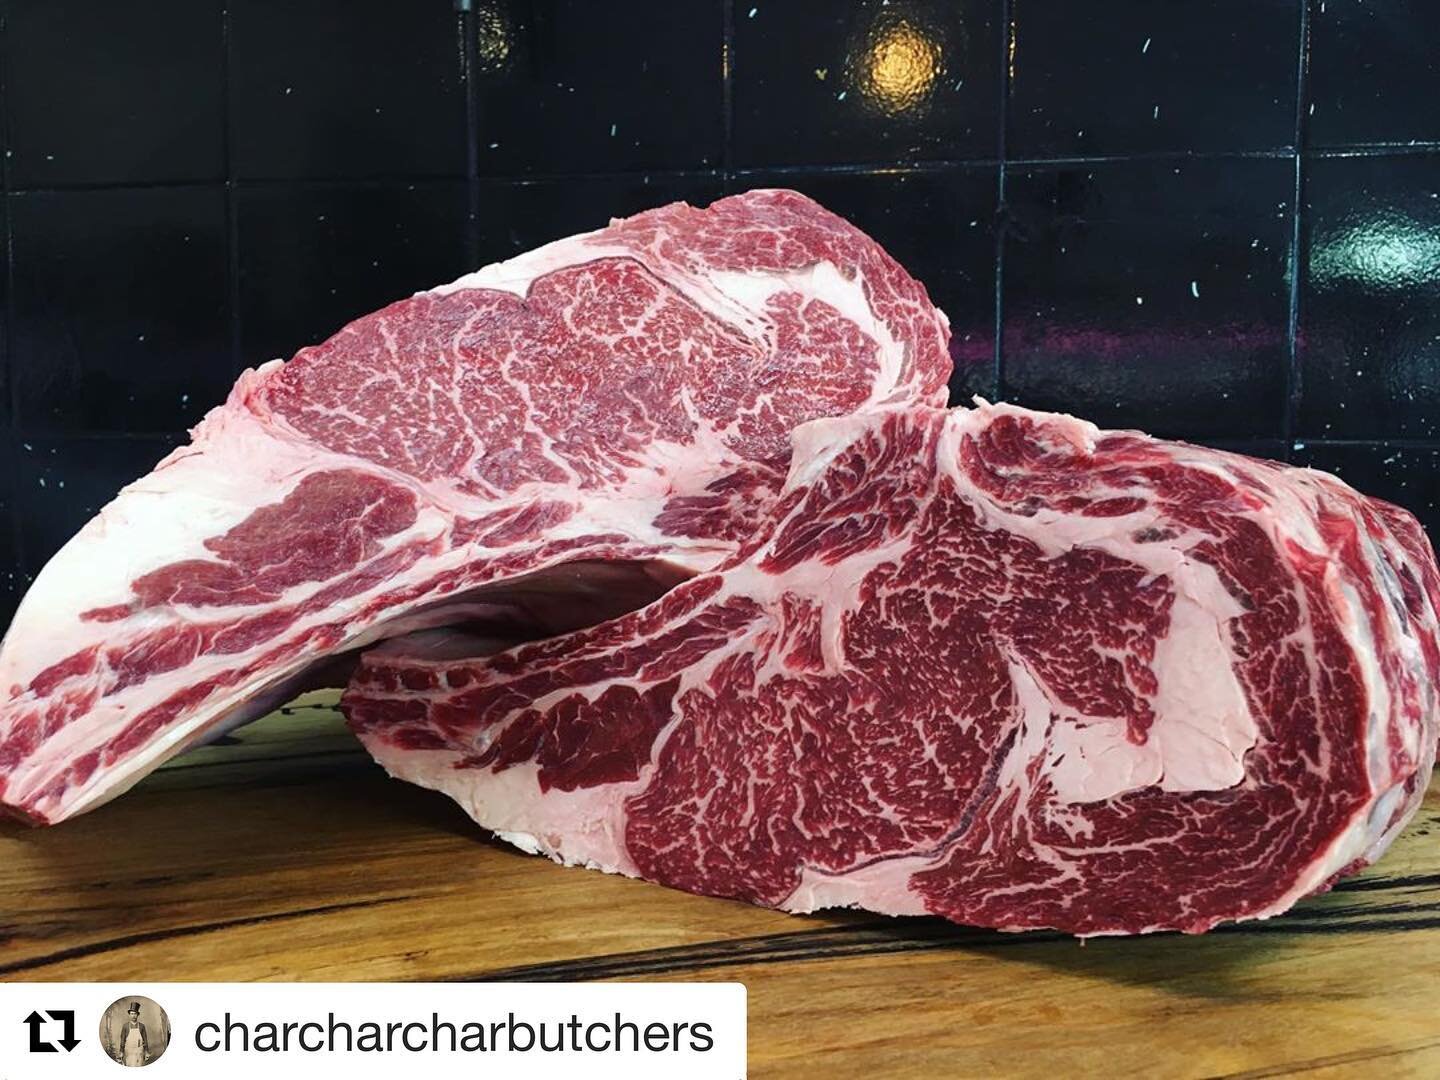 #Repost @charcharcharbutchers
・・・
That Southern Ranges Rib eye is impressive! #SR4#grassfedbeef#britishbred#ribeye#steak